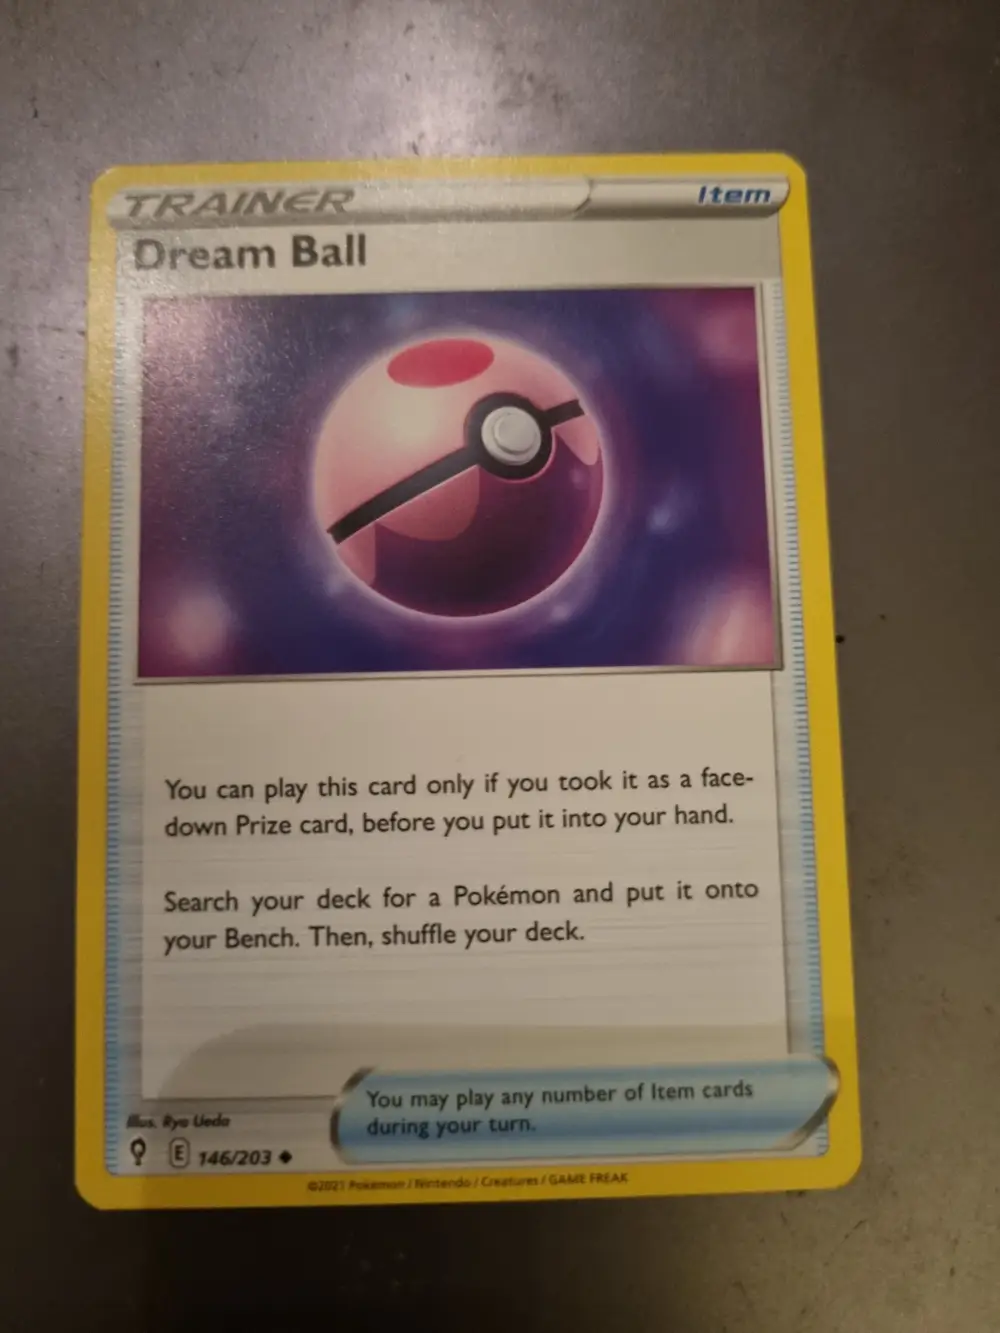 Pokémon Dreams Ball